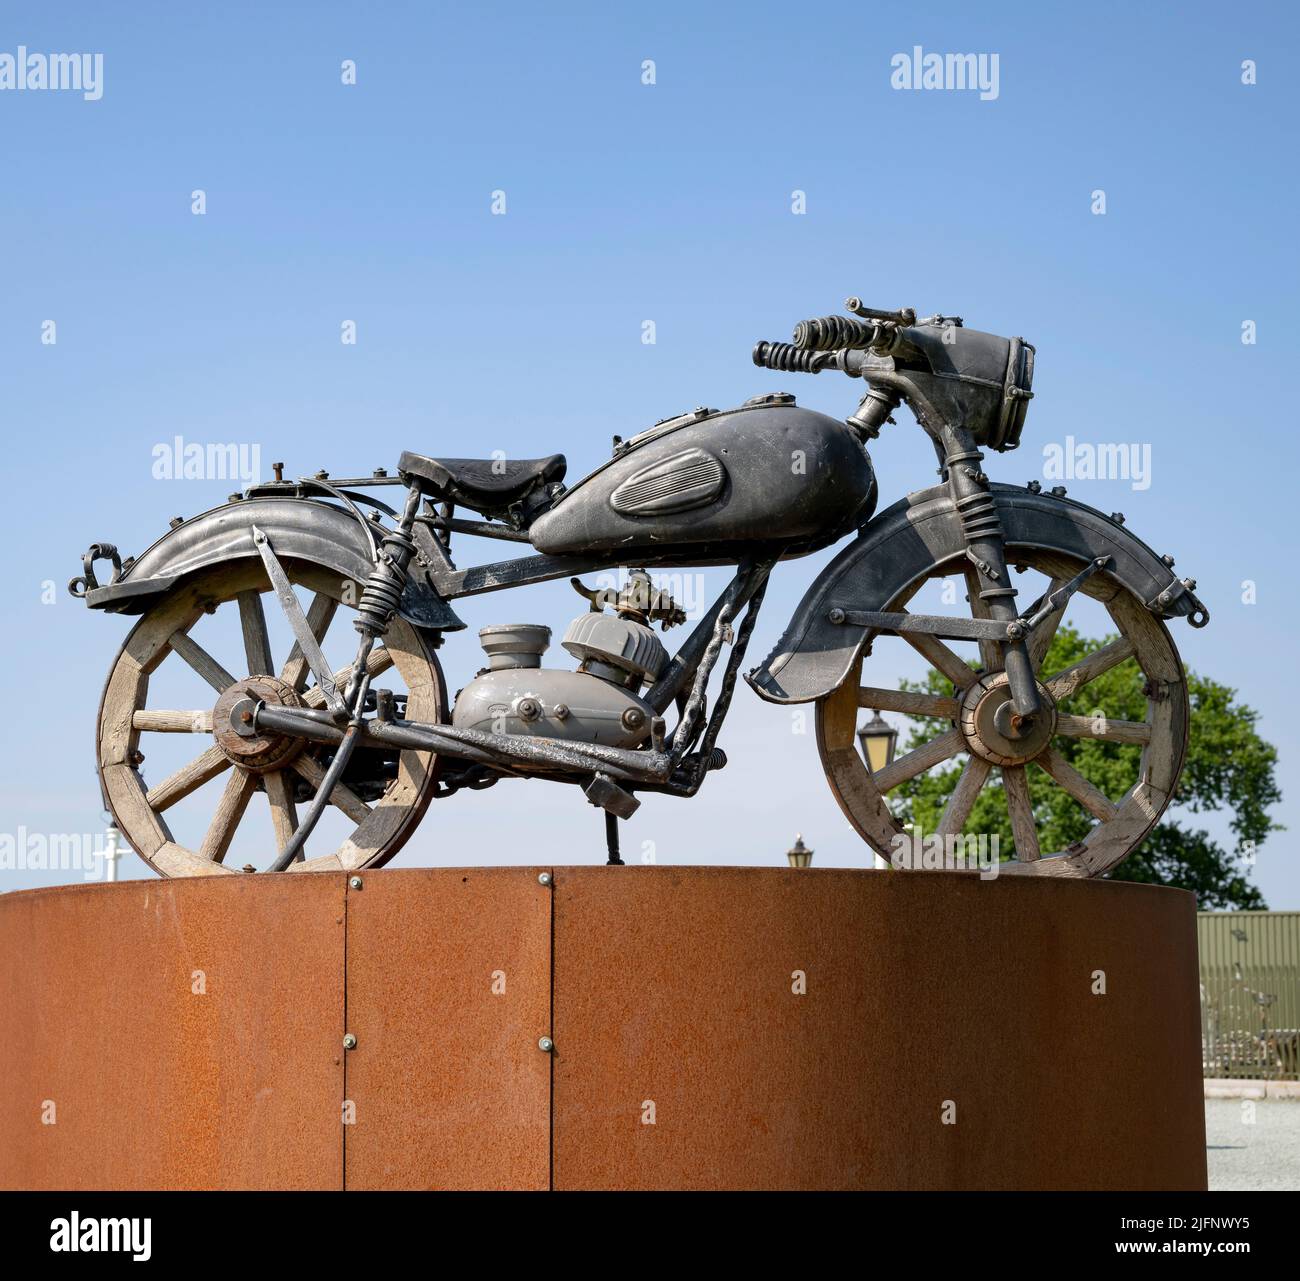 The British Ironwork Centre Motorcycle Exhibit/Sculpture Stock Photo